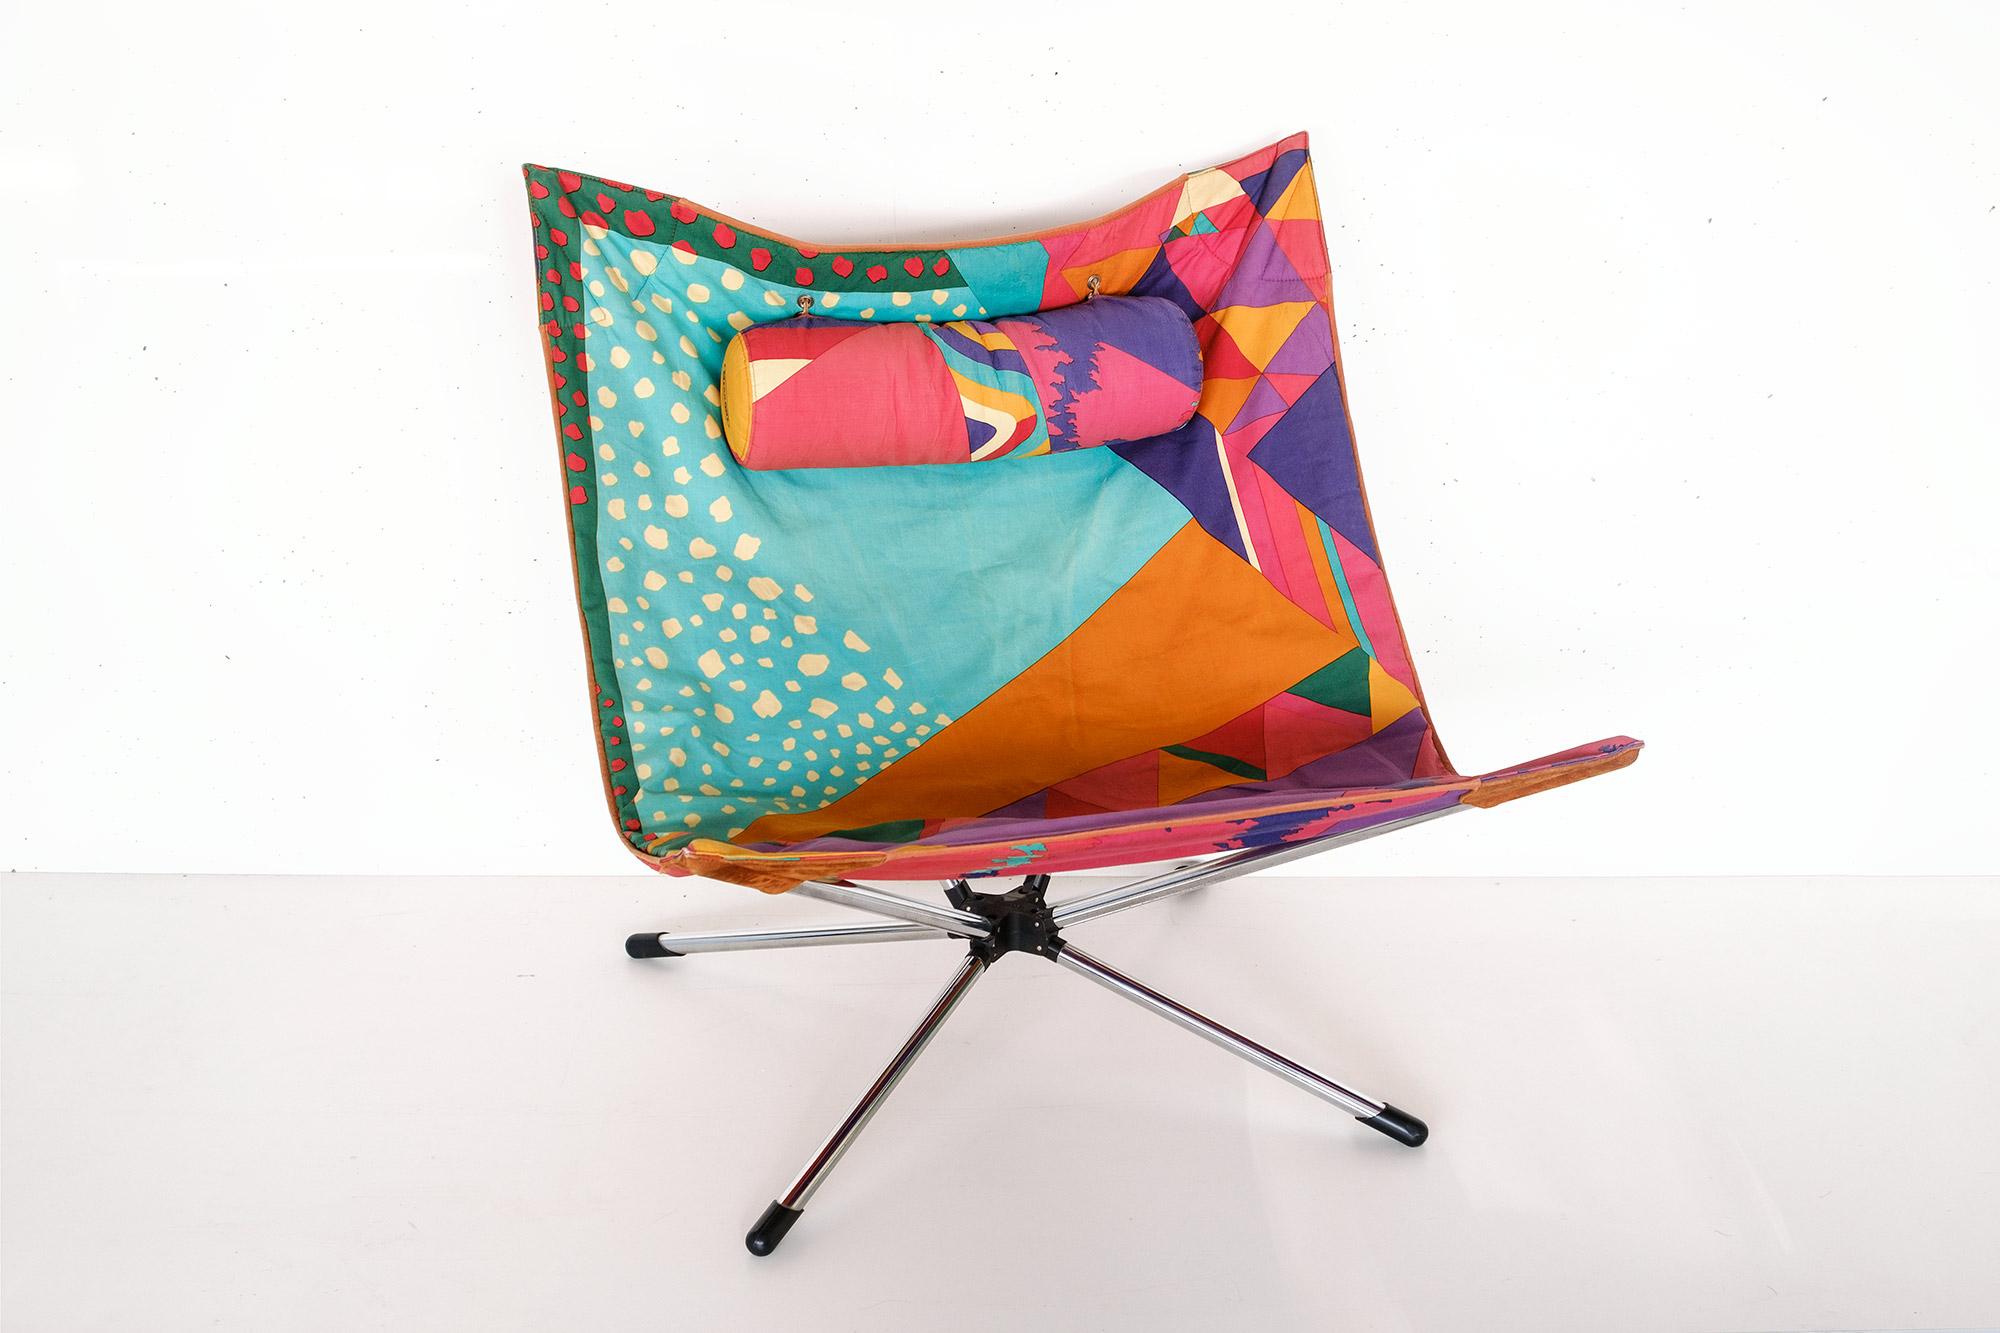 Stunning Memphis style chair by Alberto Salviati and Ambrogio Tresoldi for Missoni & Saporiti Italia
       